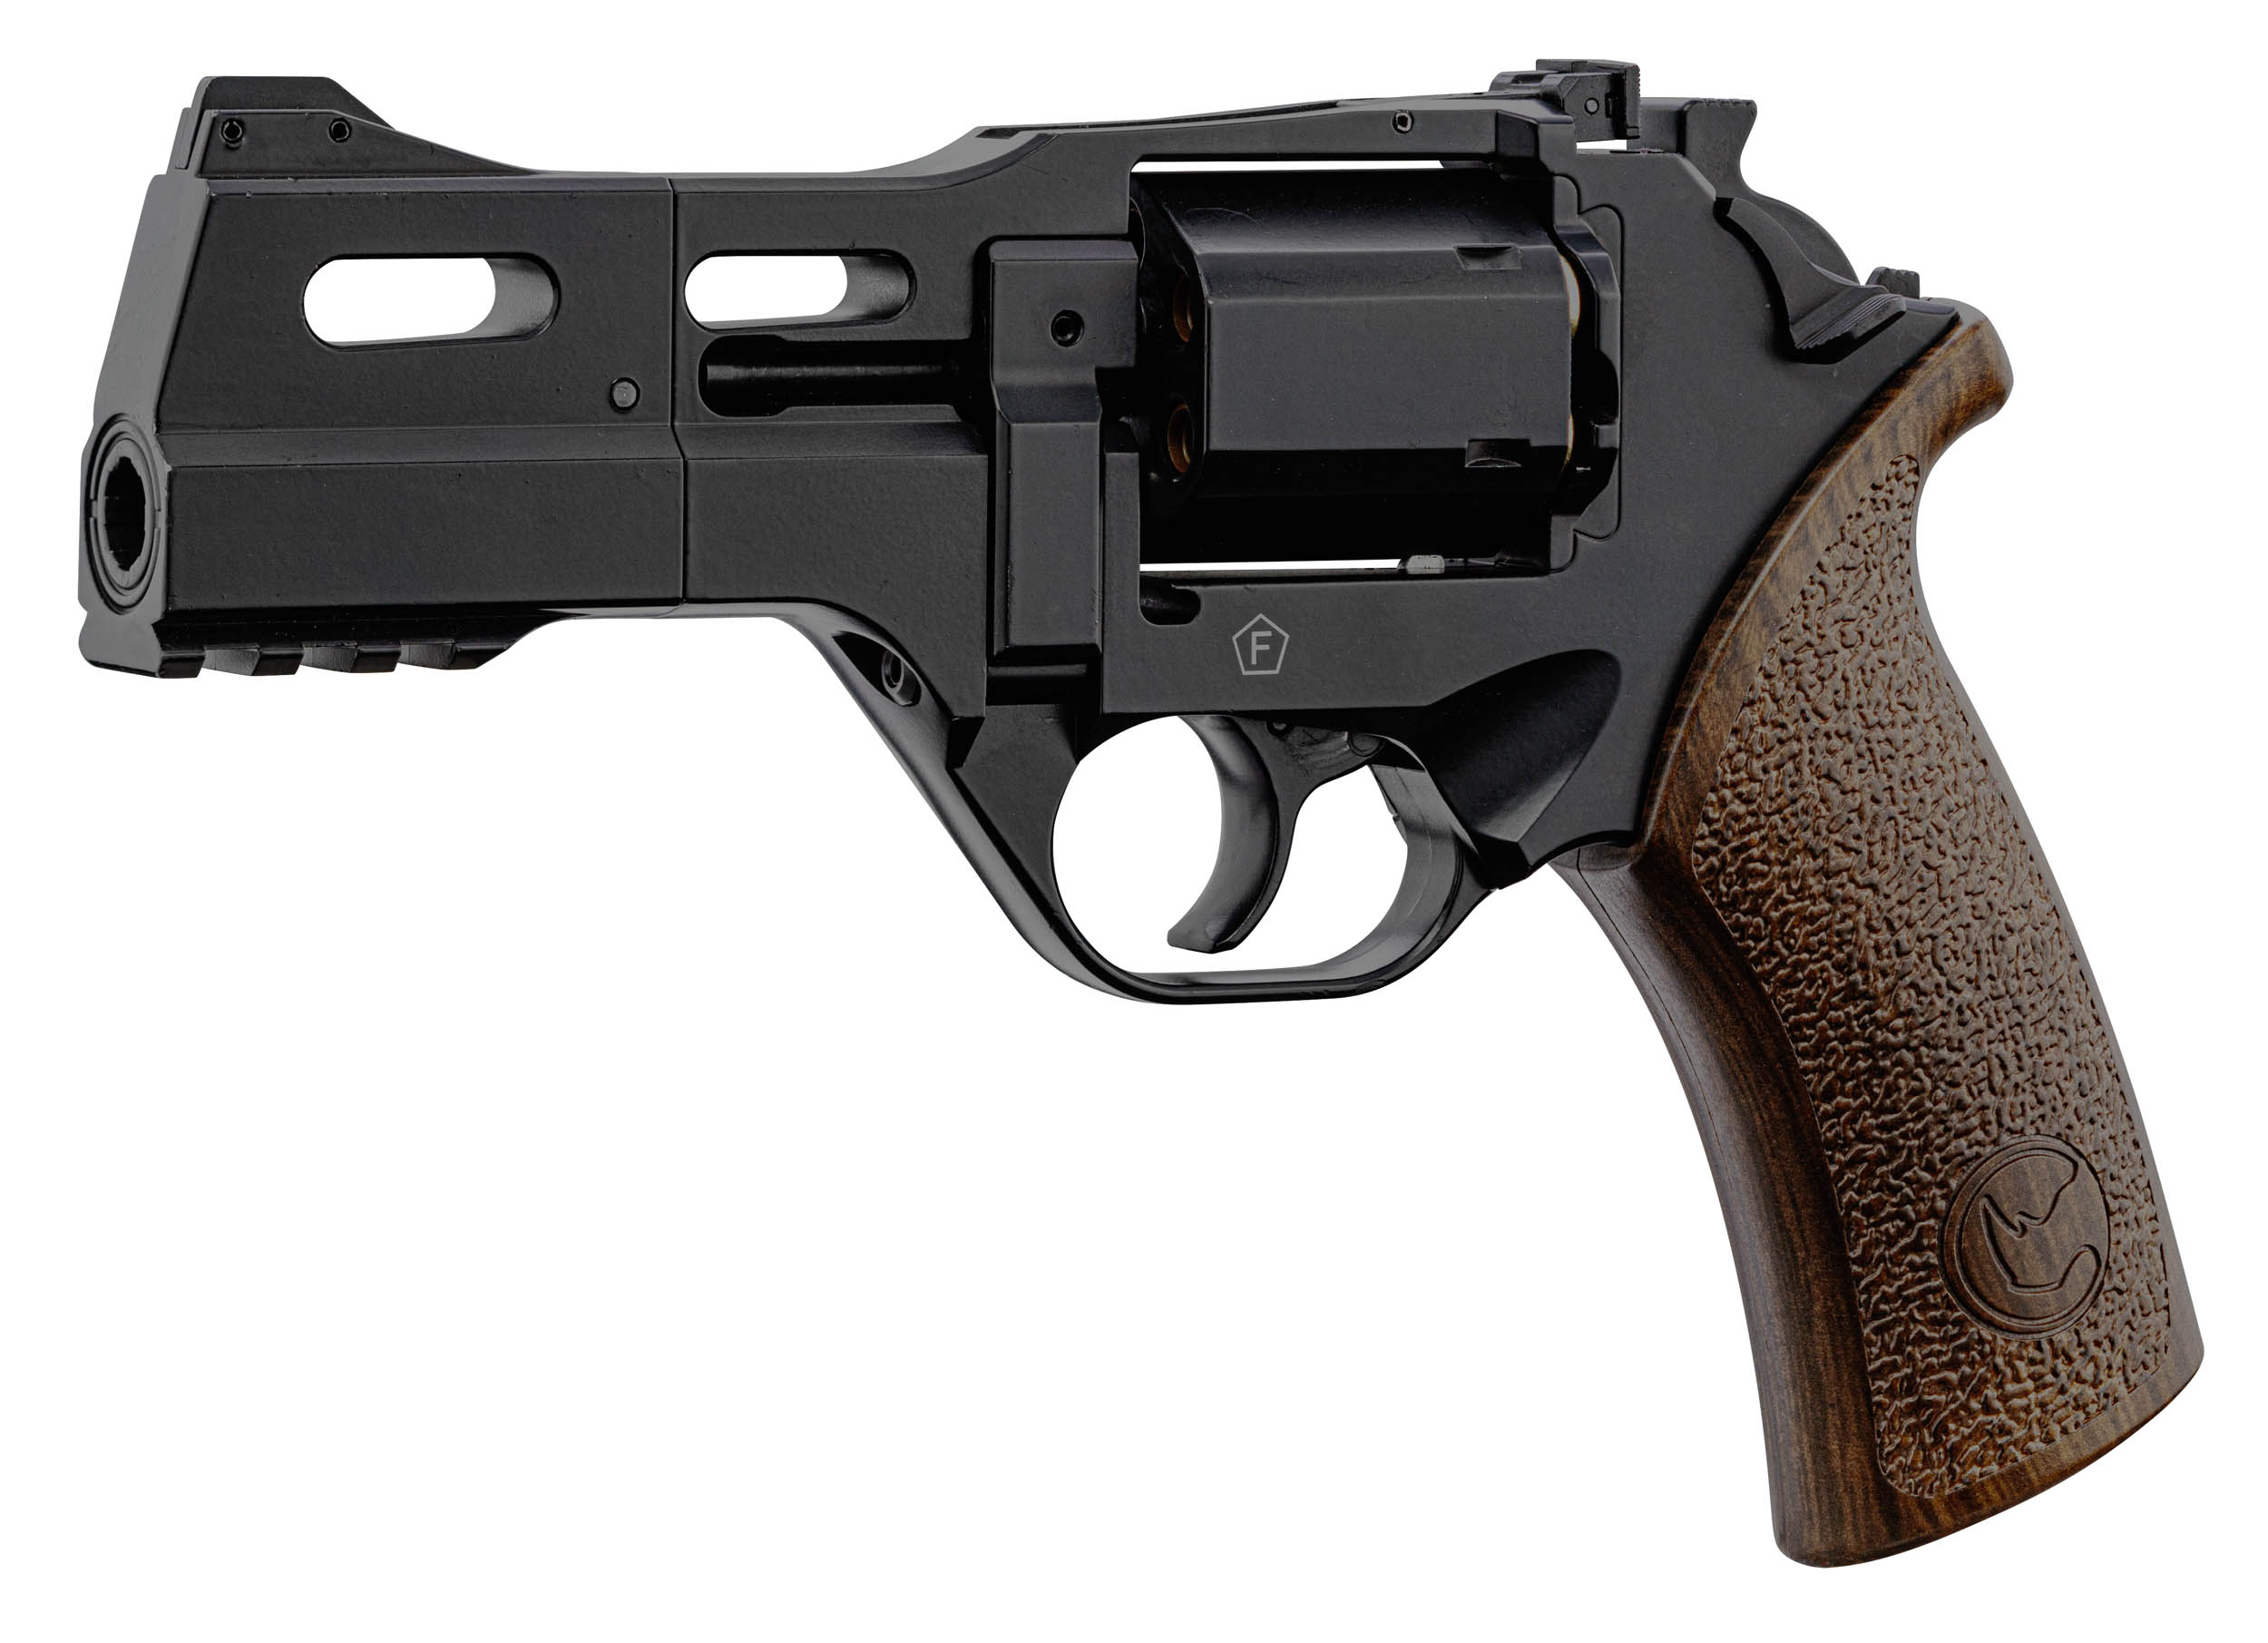 Photo Revolver Rhino 40 DS 4.5mm Cal. 177 CO2 <3,5J Black Mat